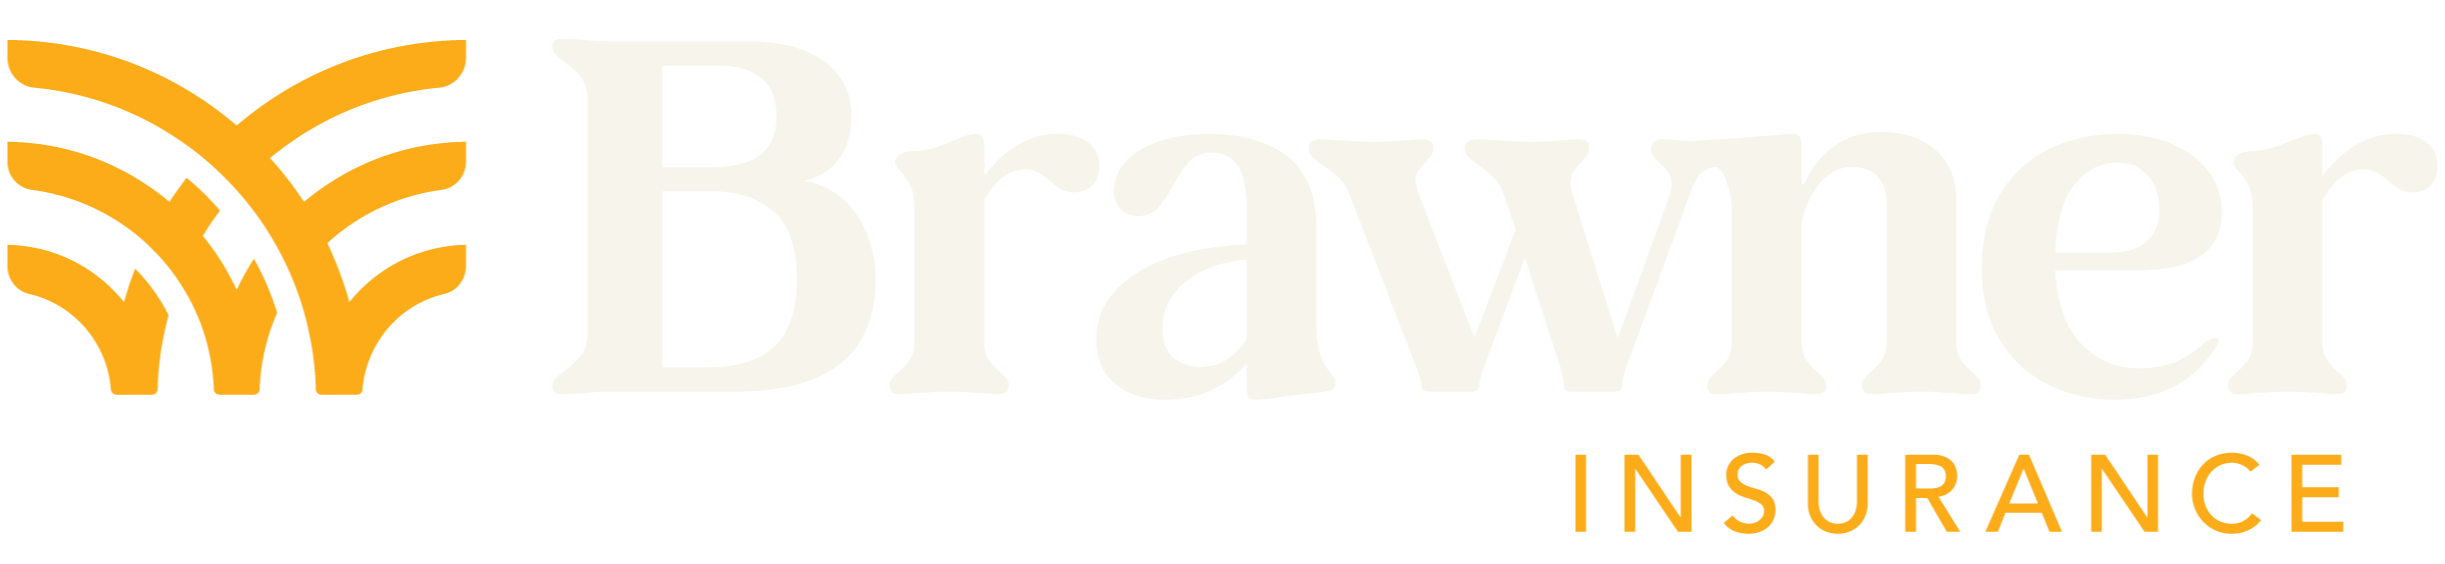 Brawner Insurance_Logo_Two Color-1